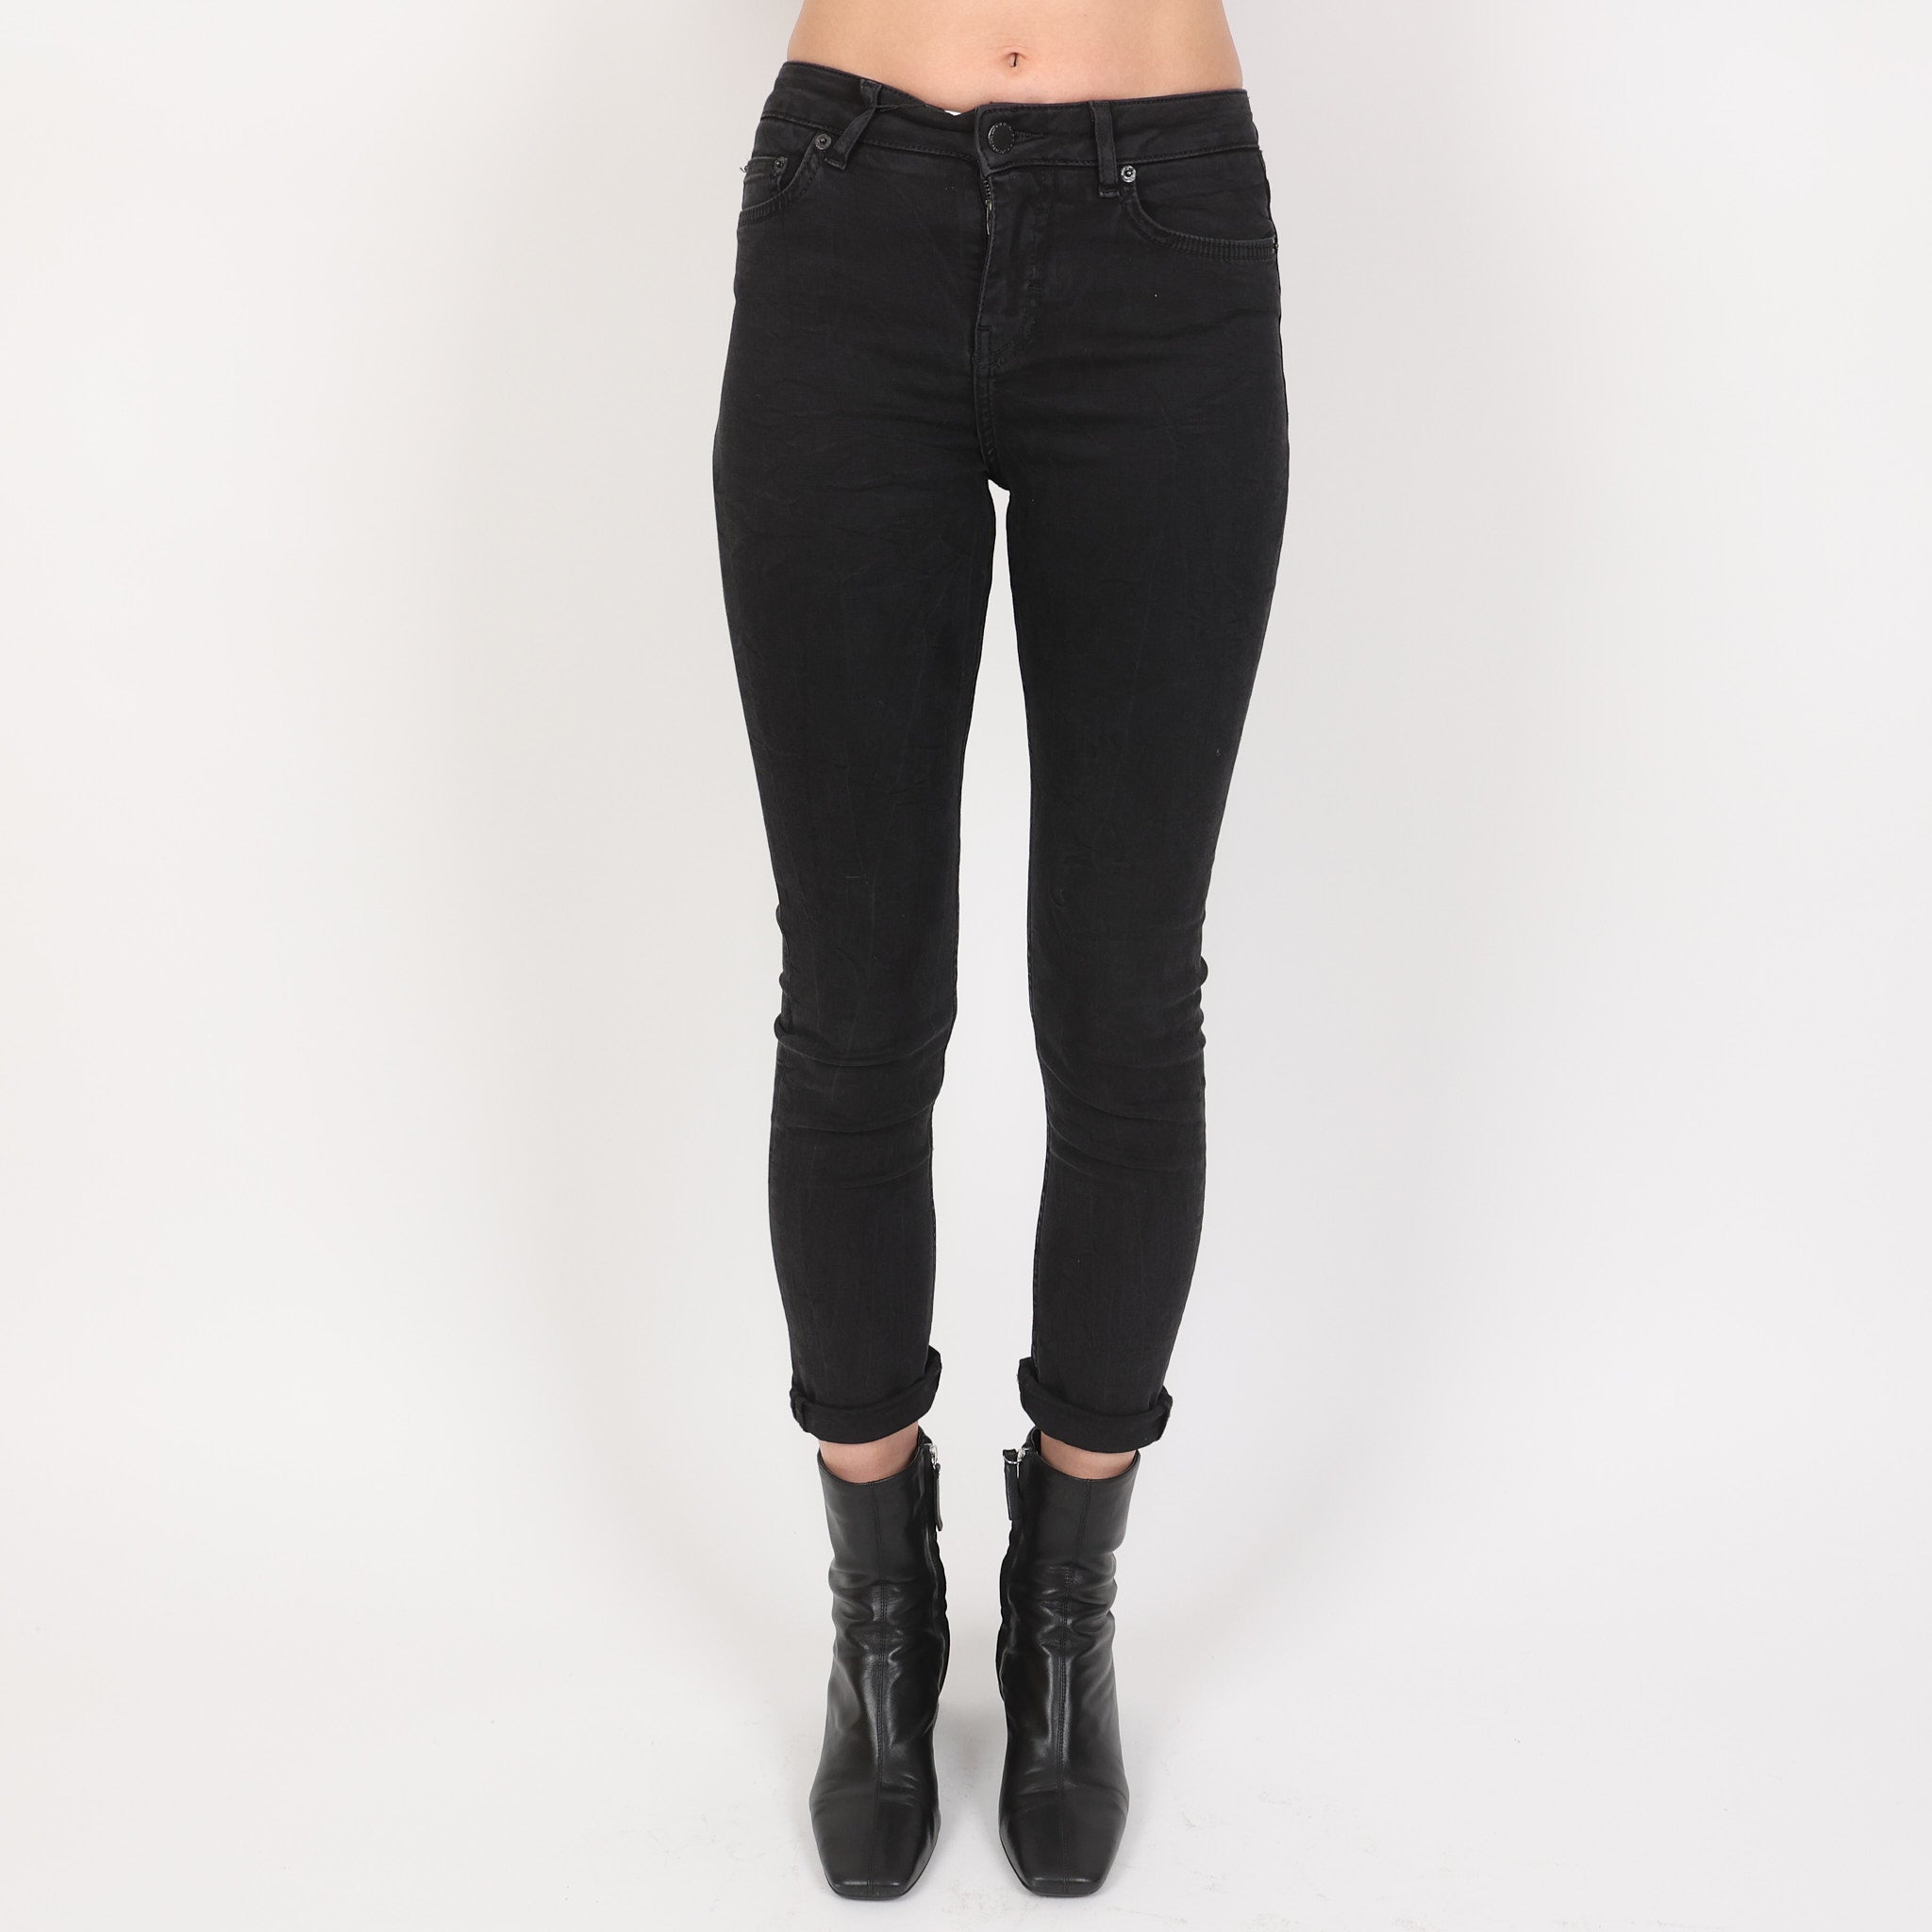 Jeans, UK Size 6